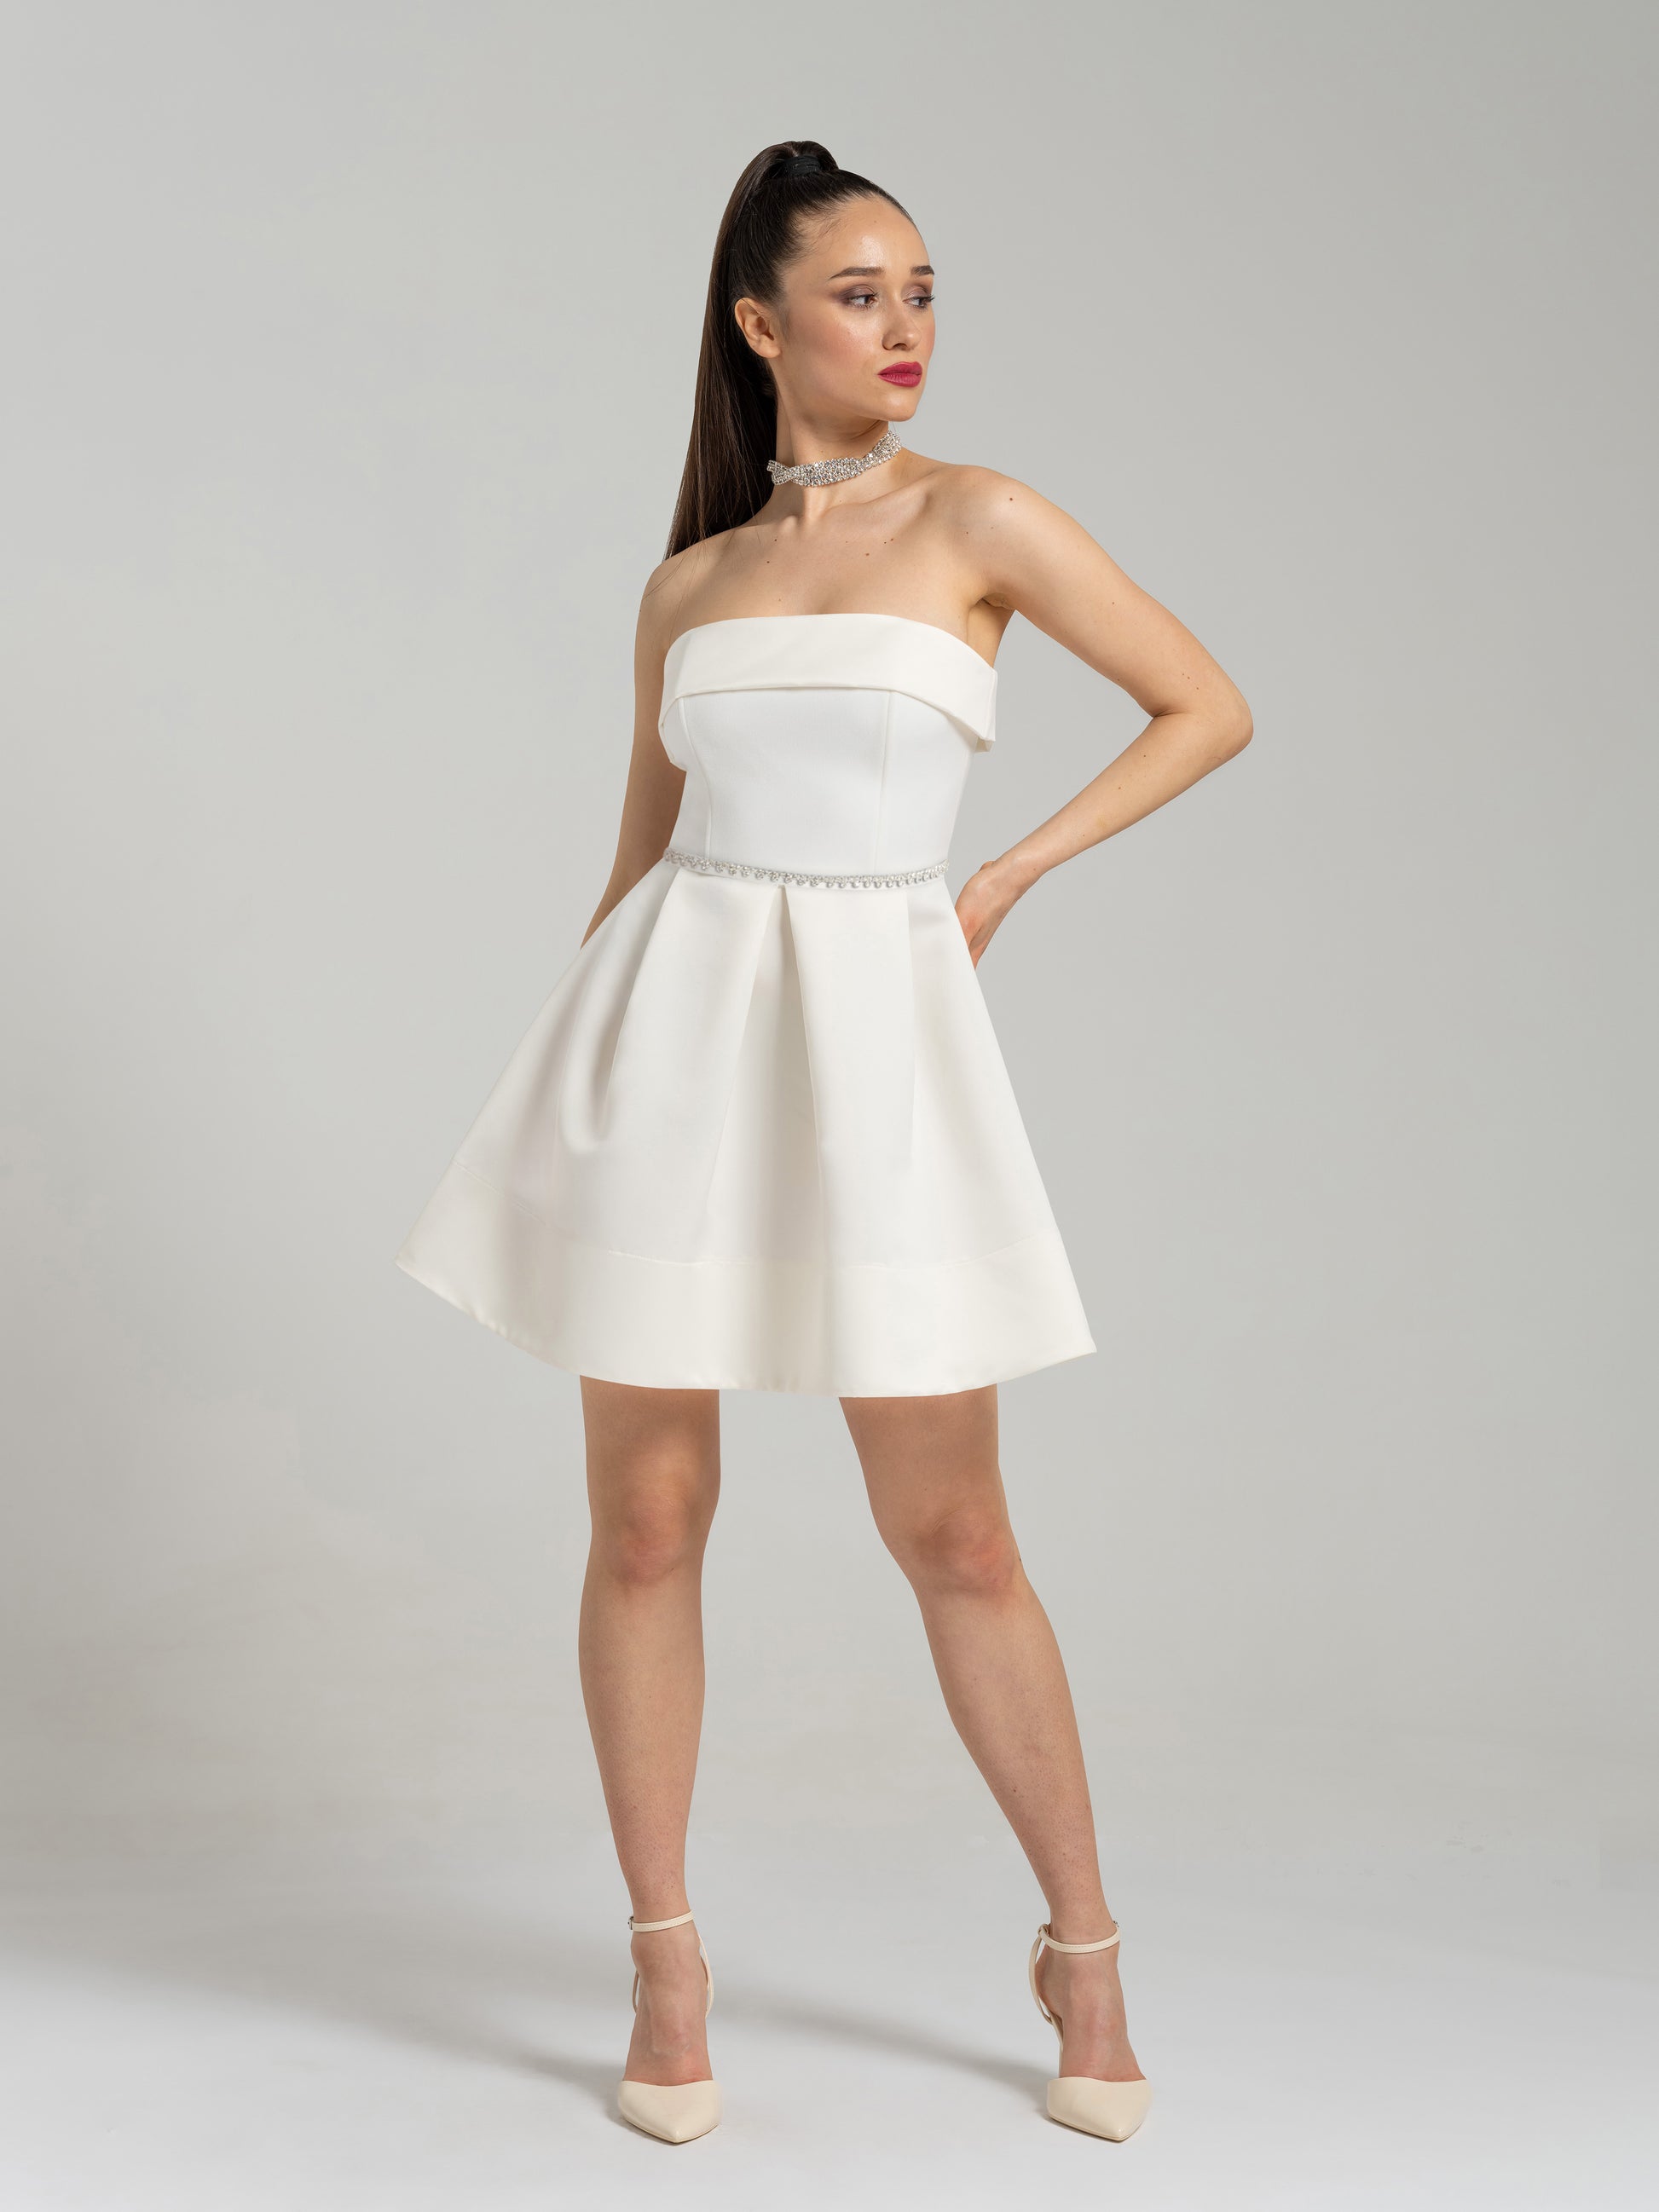 Wild Flower Mini Dress with Crystal Belt - Pearl White by Tia Dorraine Women's Luxury Fashion Designer Clothing Brand